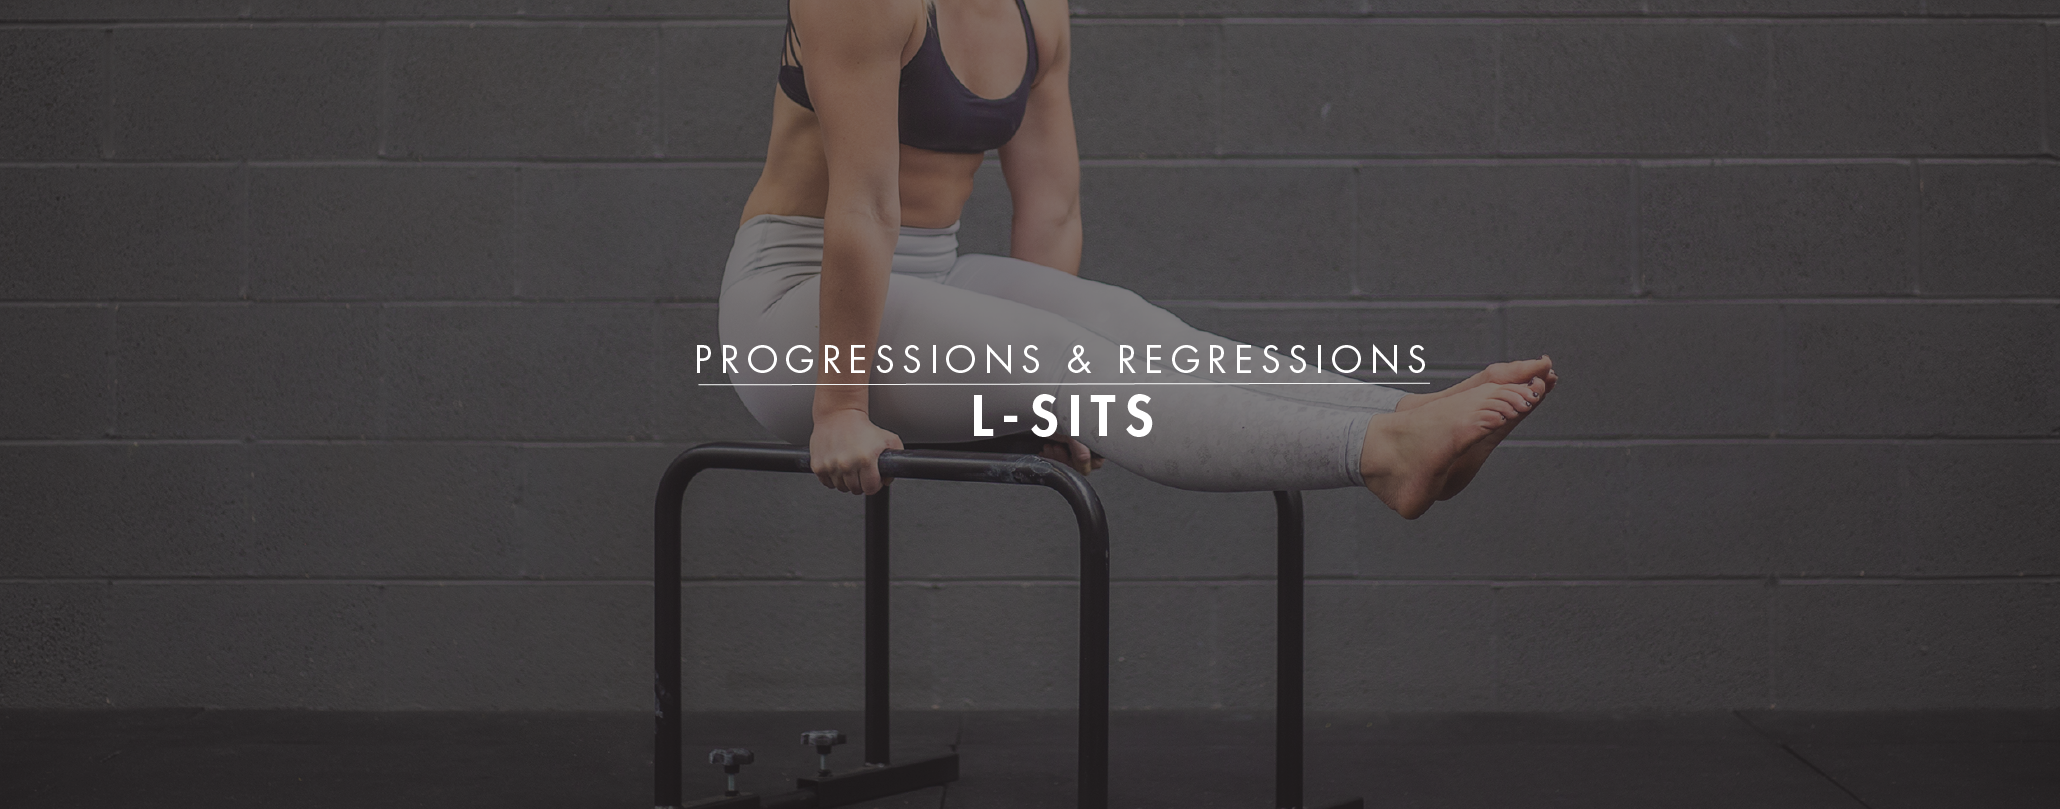 L-Sit: benefits and progression - CrossMAG